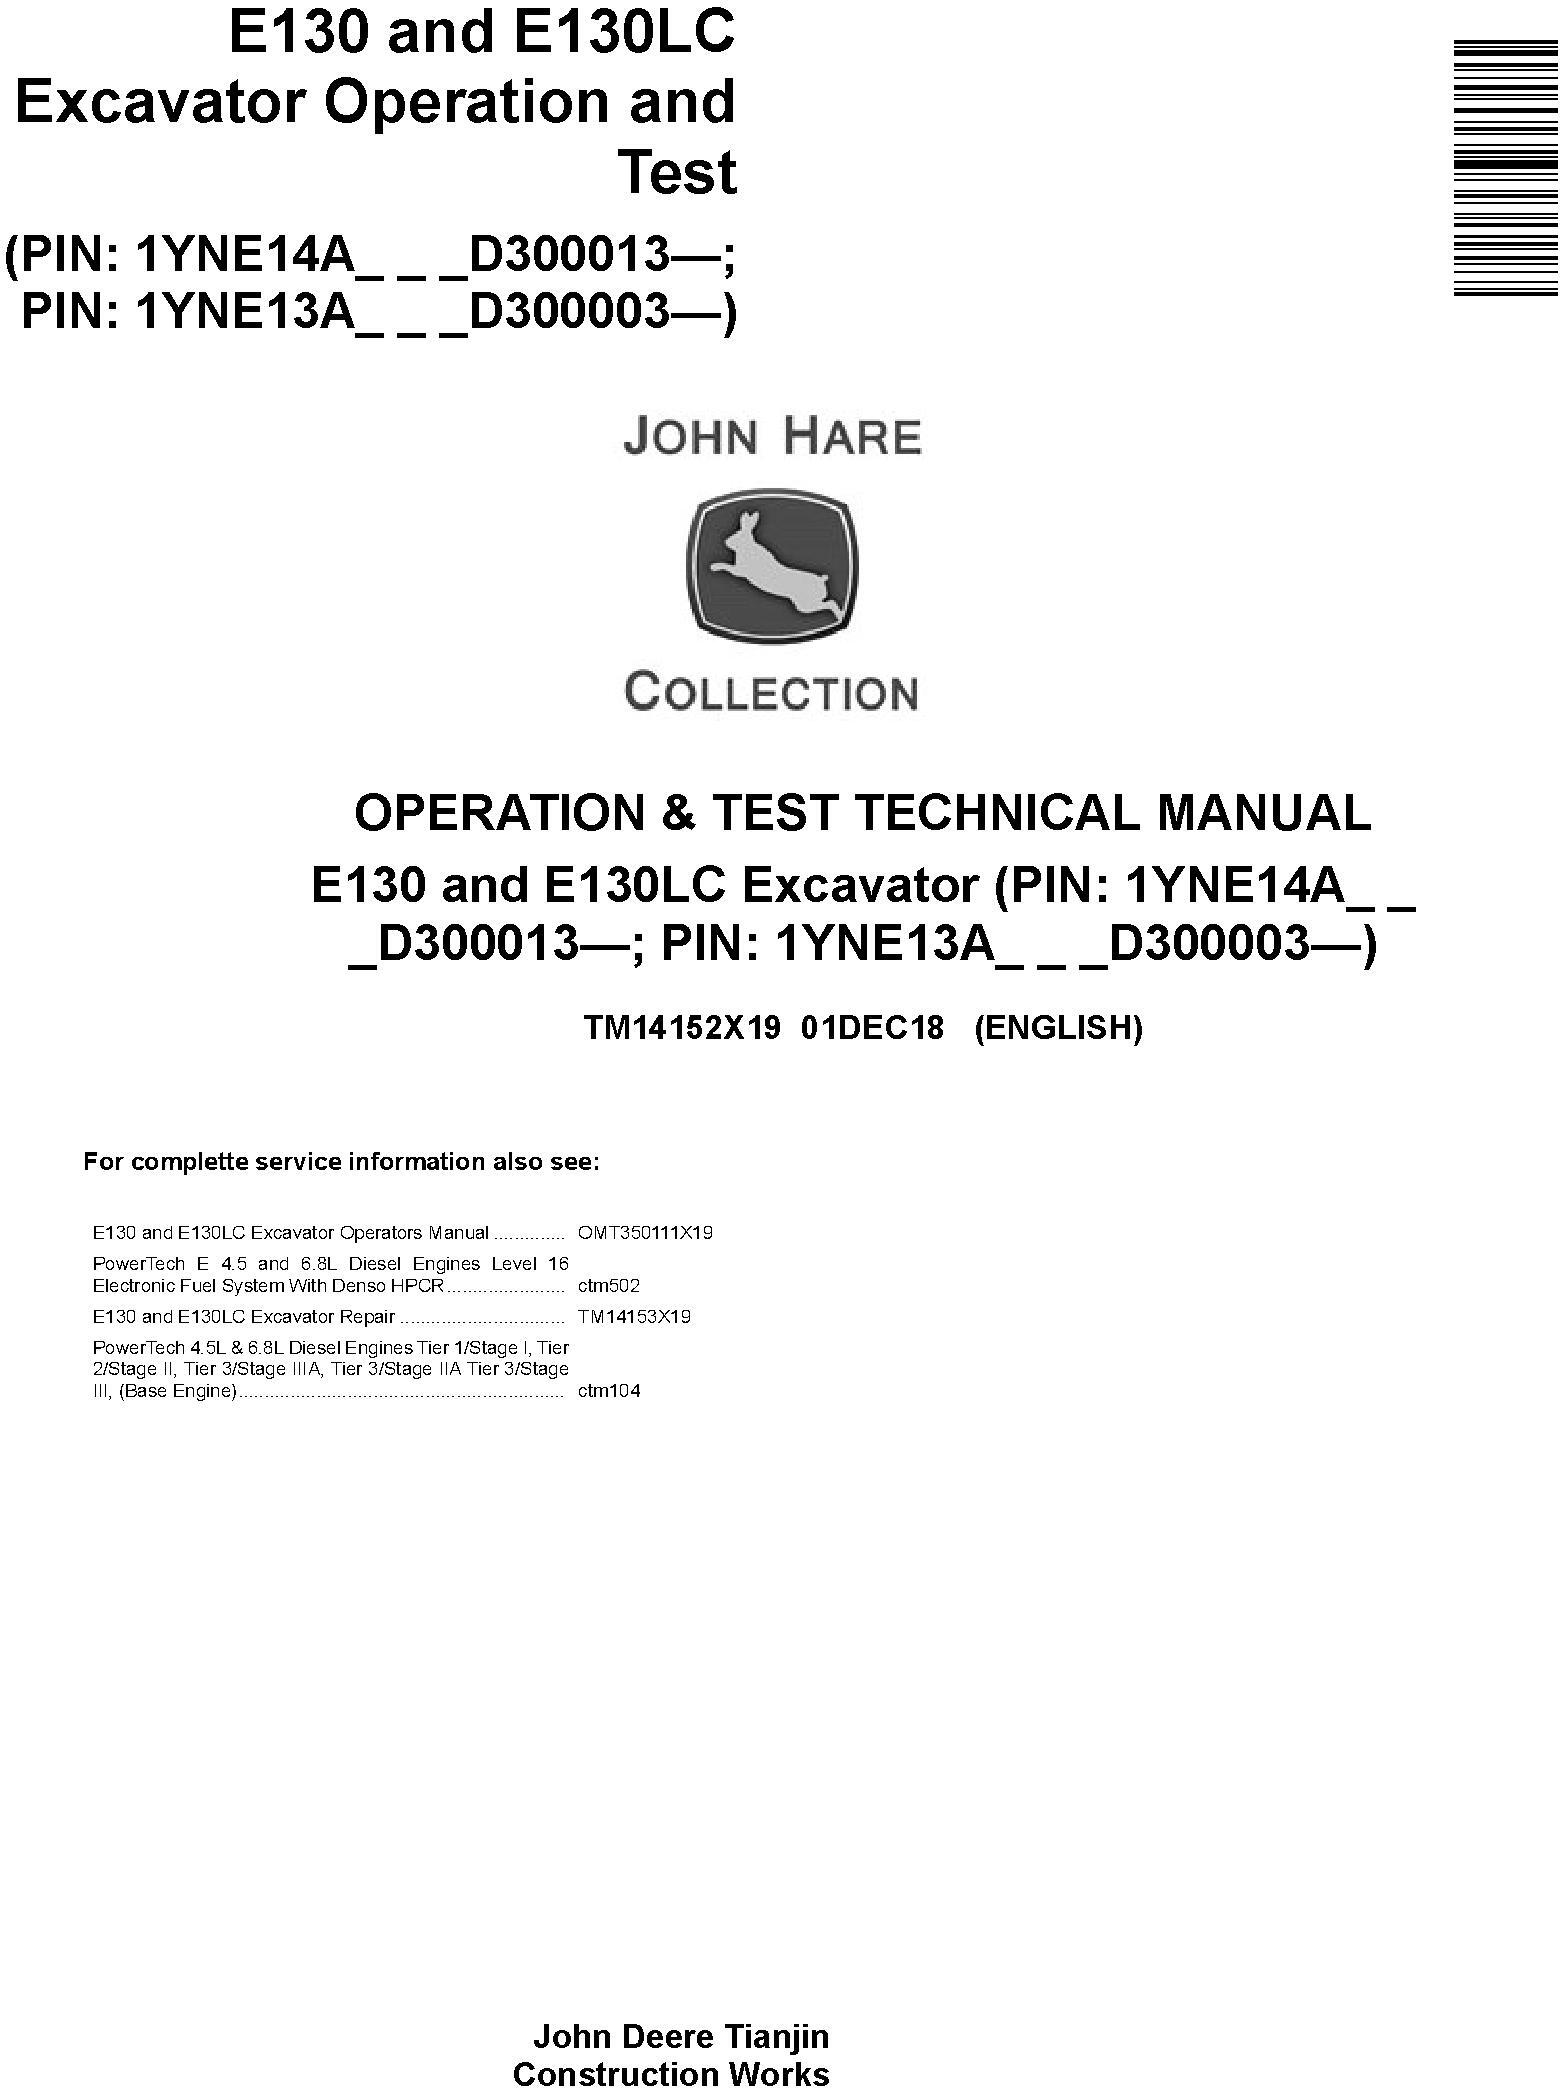 John Deere E130 E130LC Excavator Operation Test Technical Manual TM14152X19